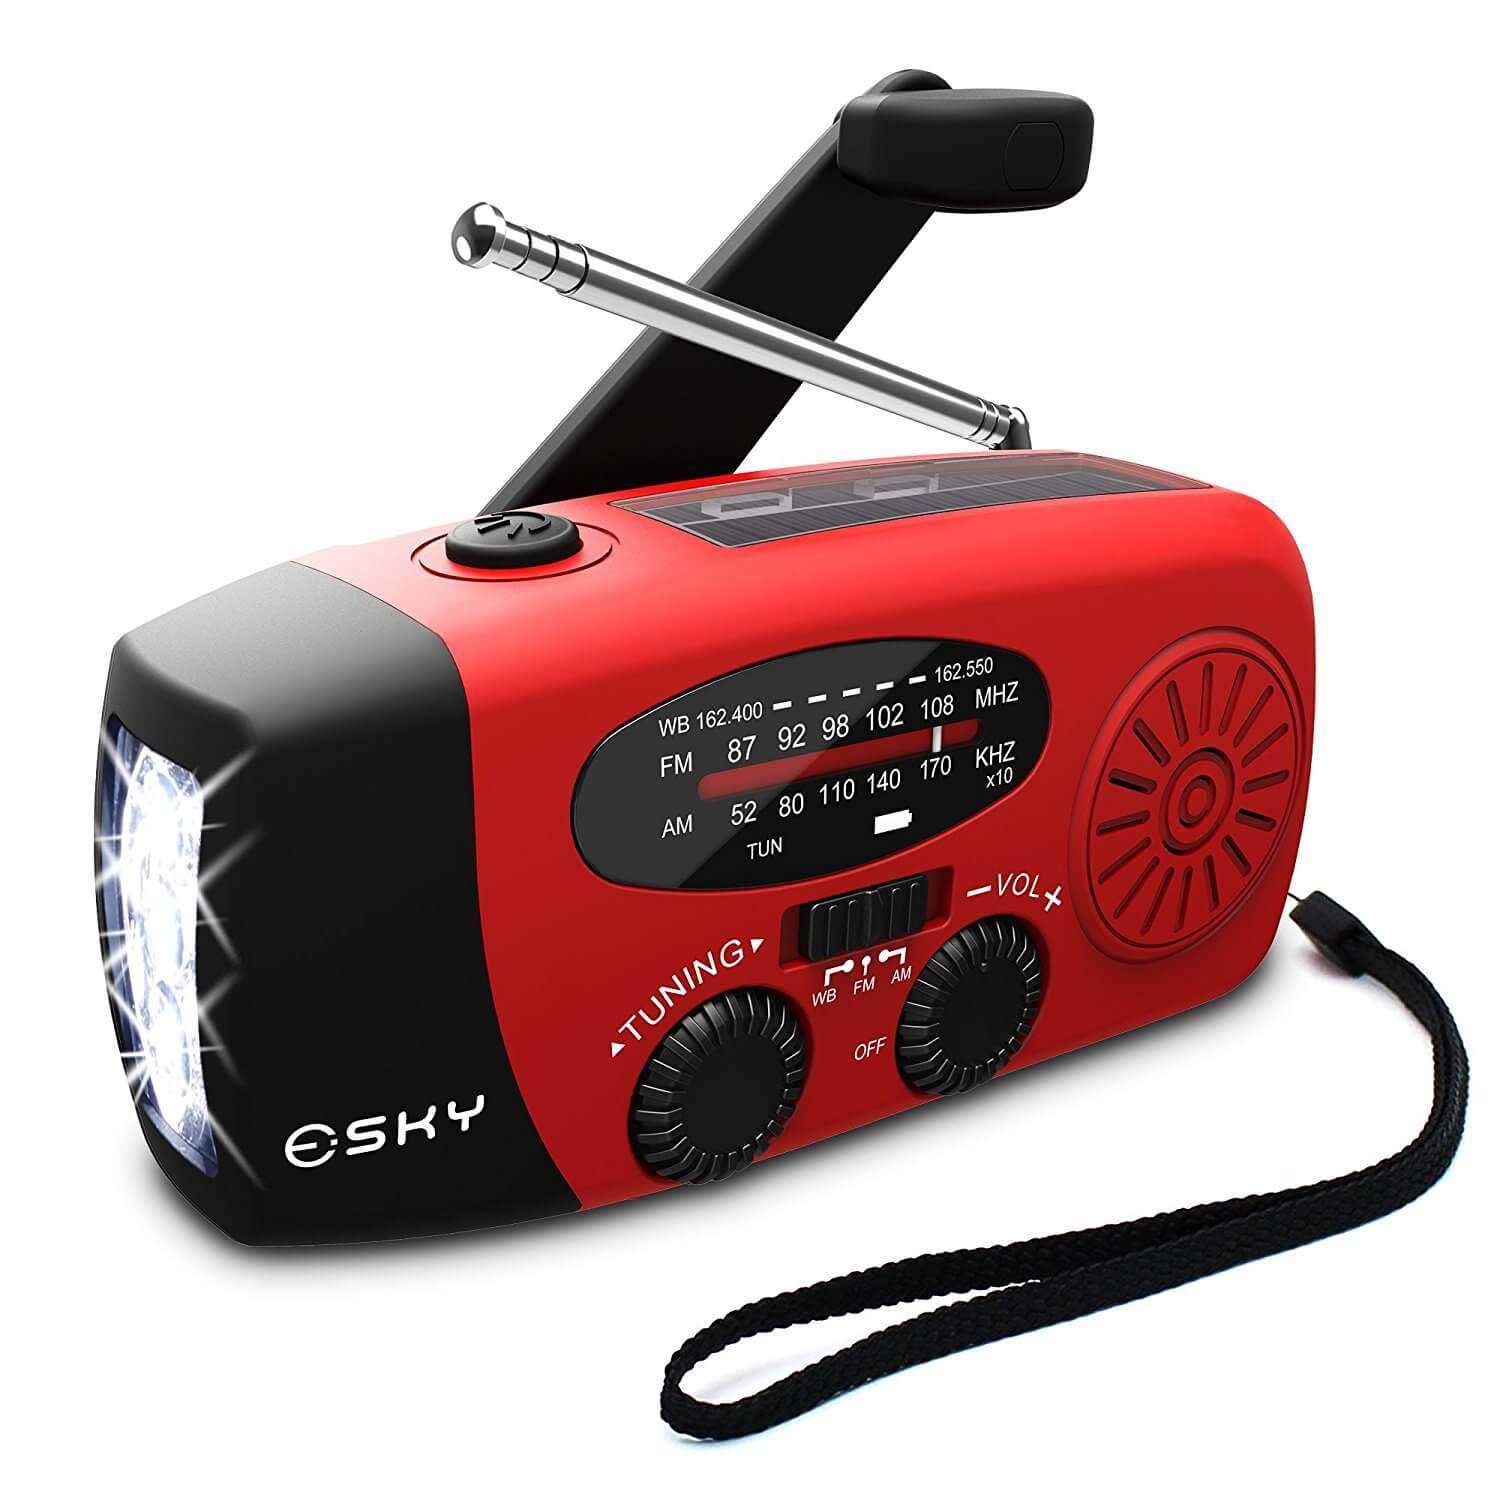 Esky Emergency Radios Hand Crank Self Powered Solar FM/AM/NOAA Weather Radio